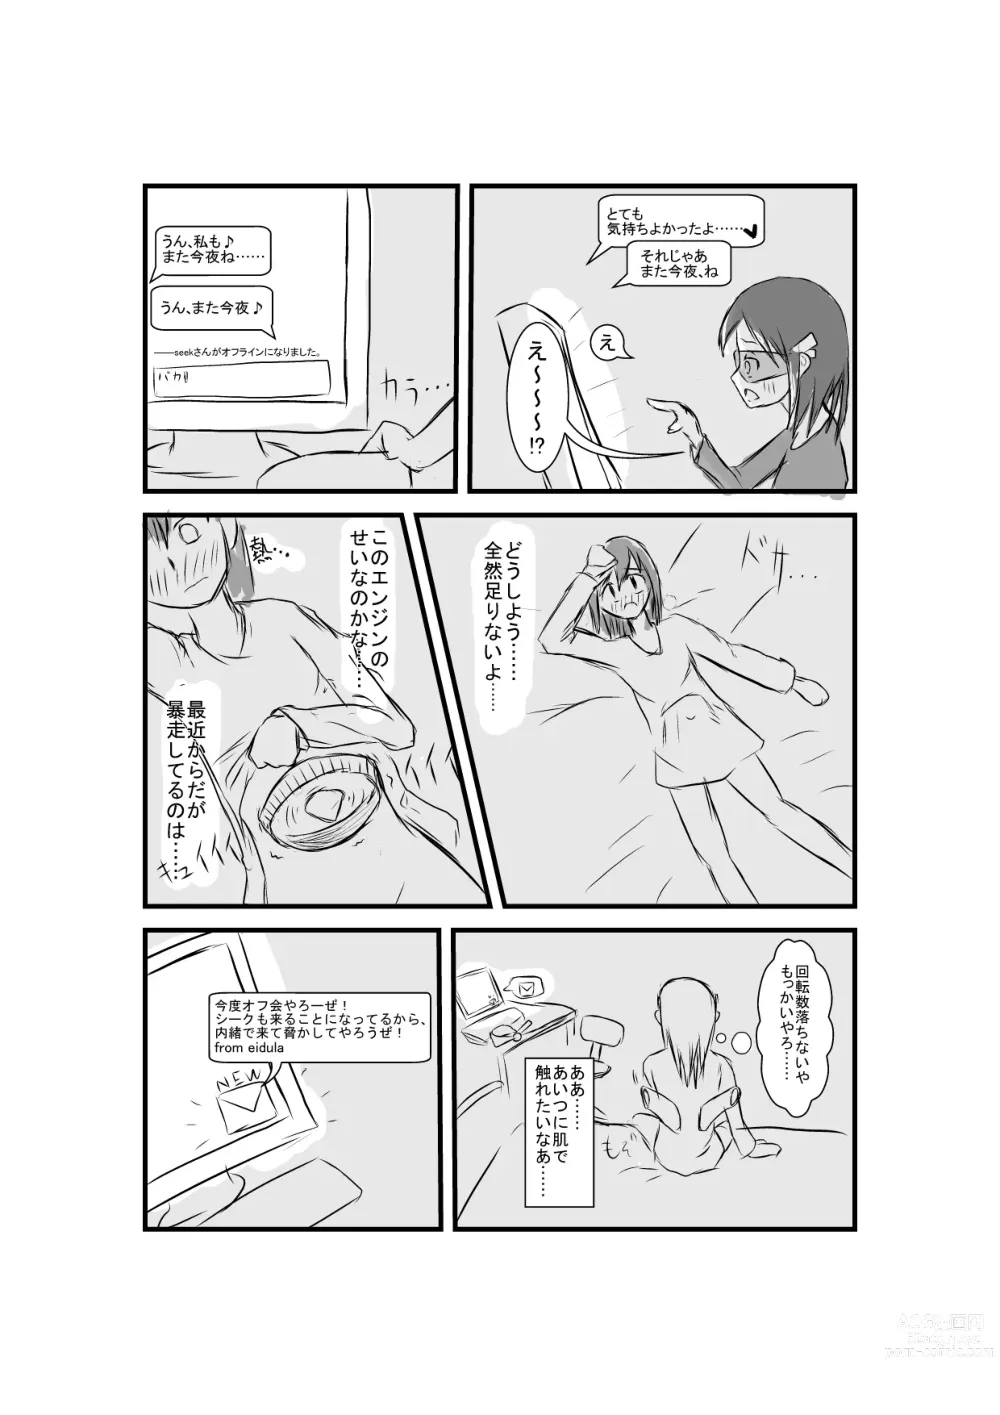 Page 7 of doujinshi Blaze Engine